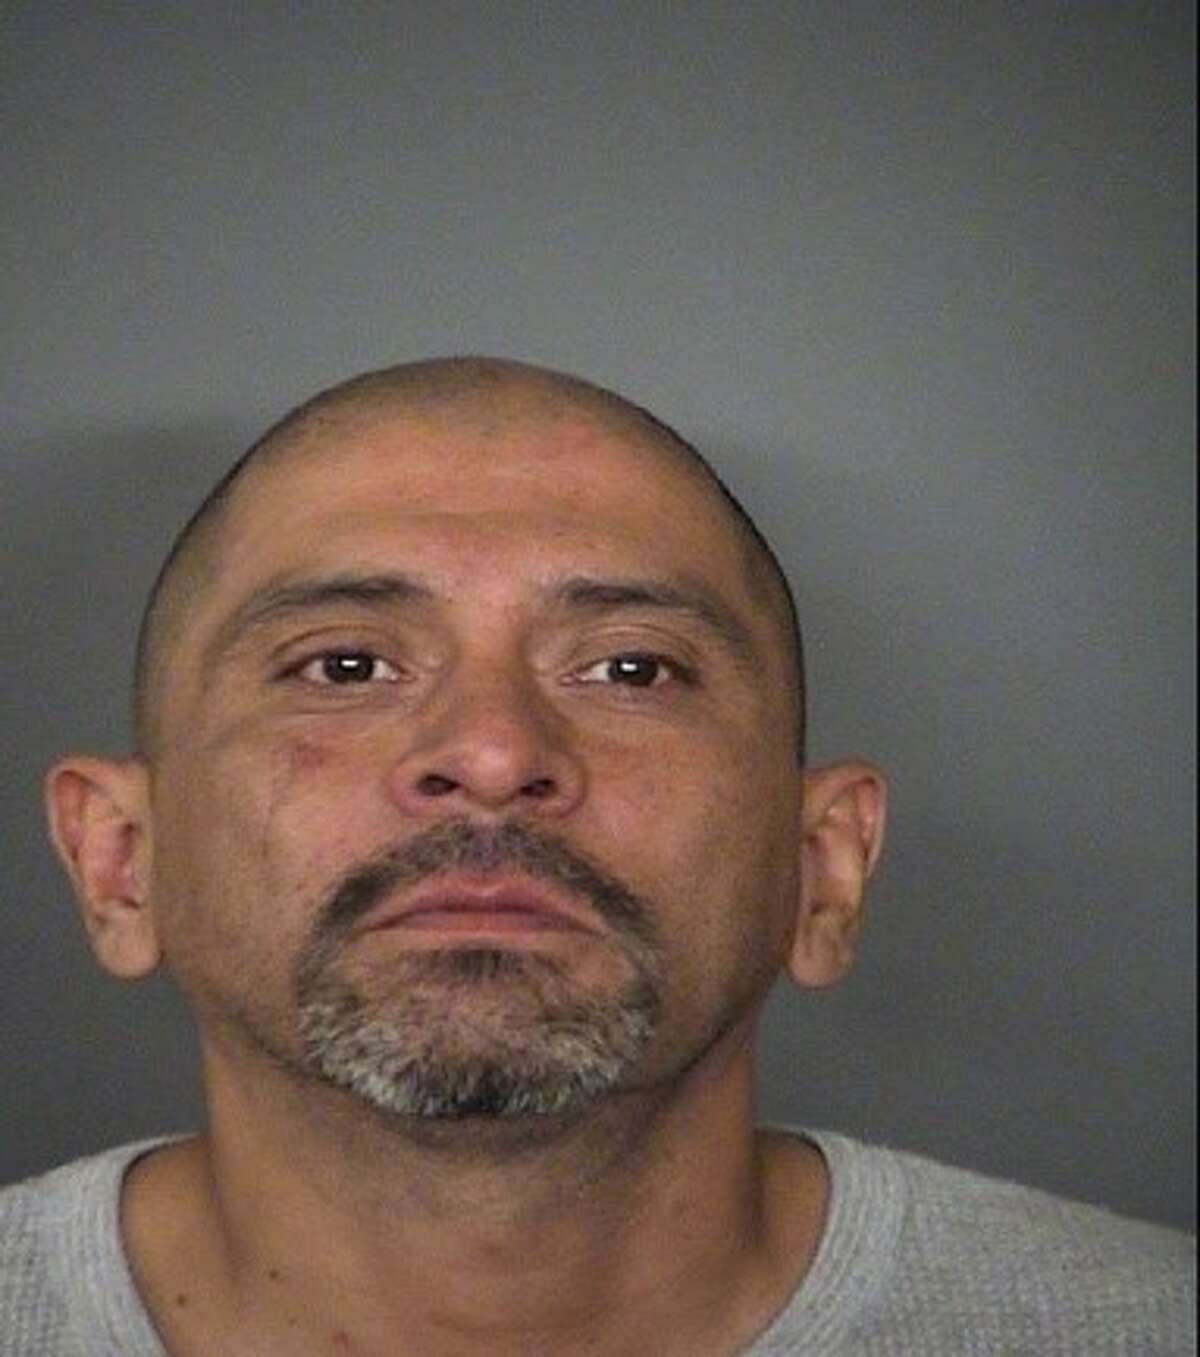 Antonio Avina died on Jan. 31, according to the San Antonio Police Department.